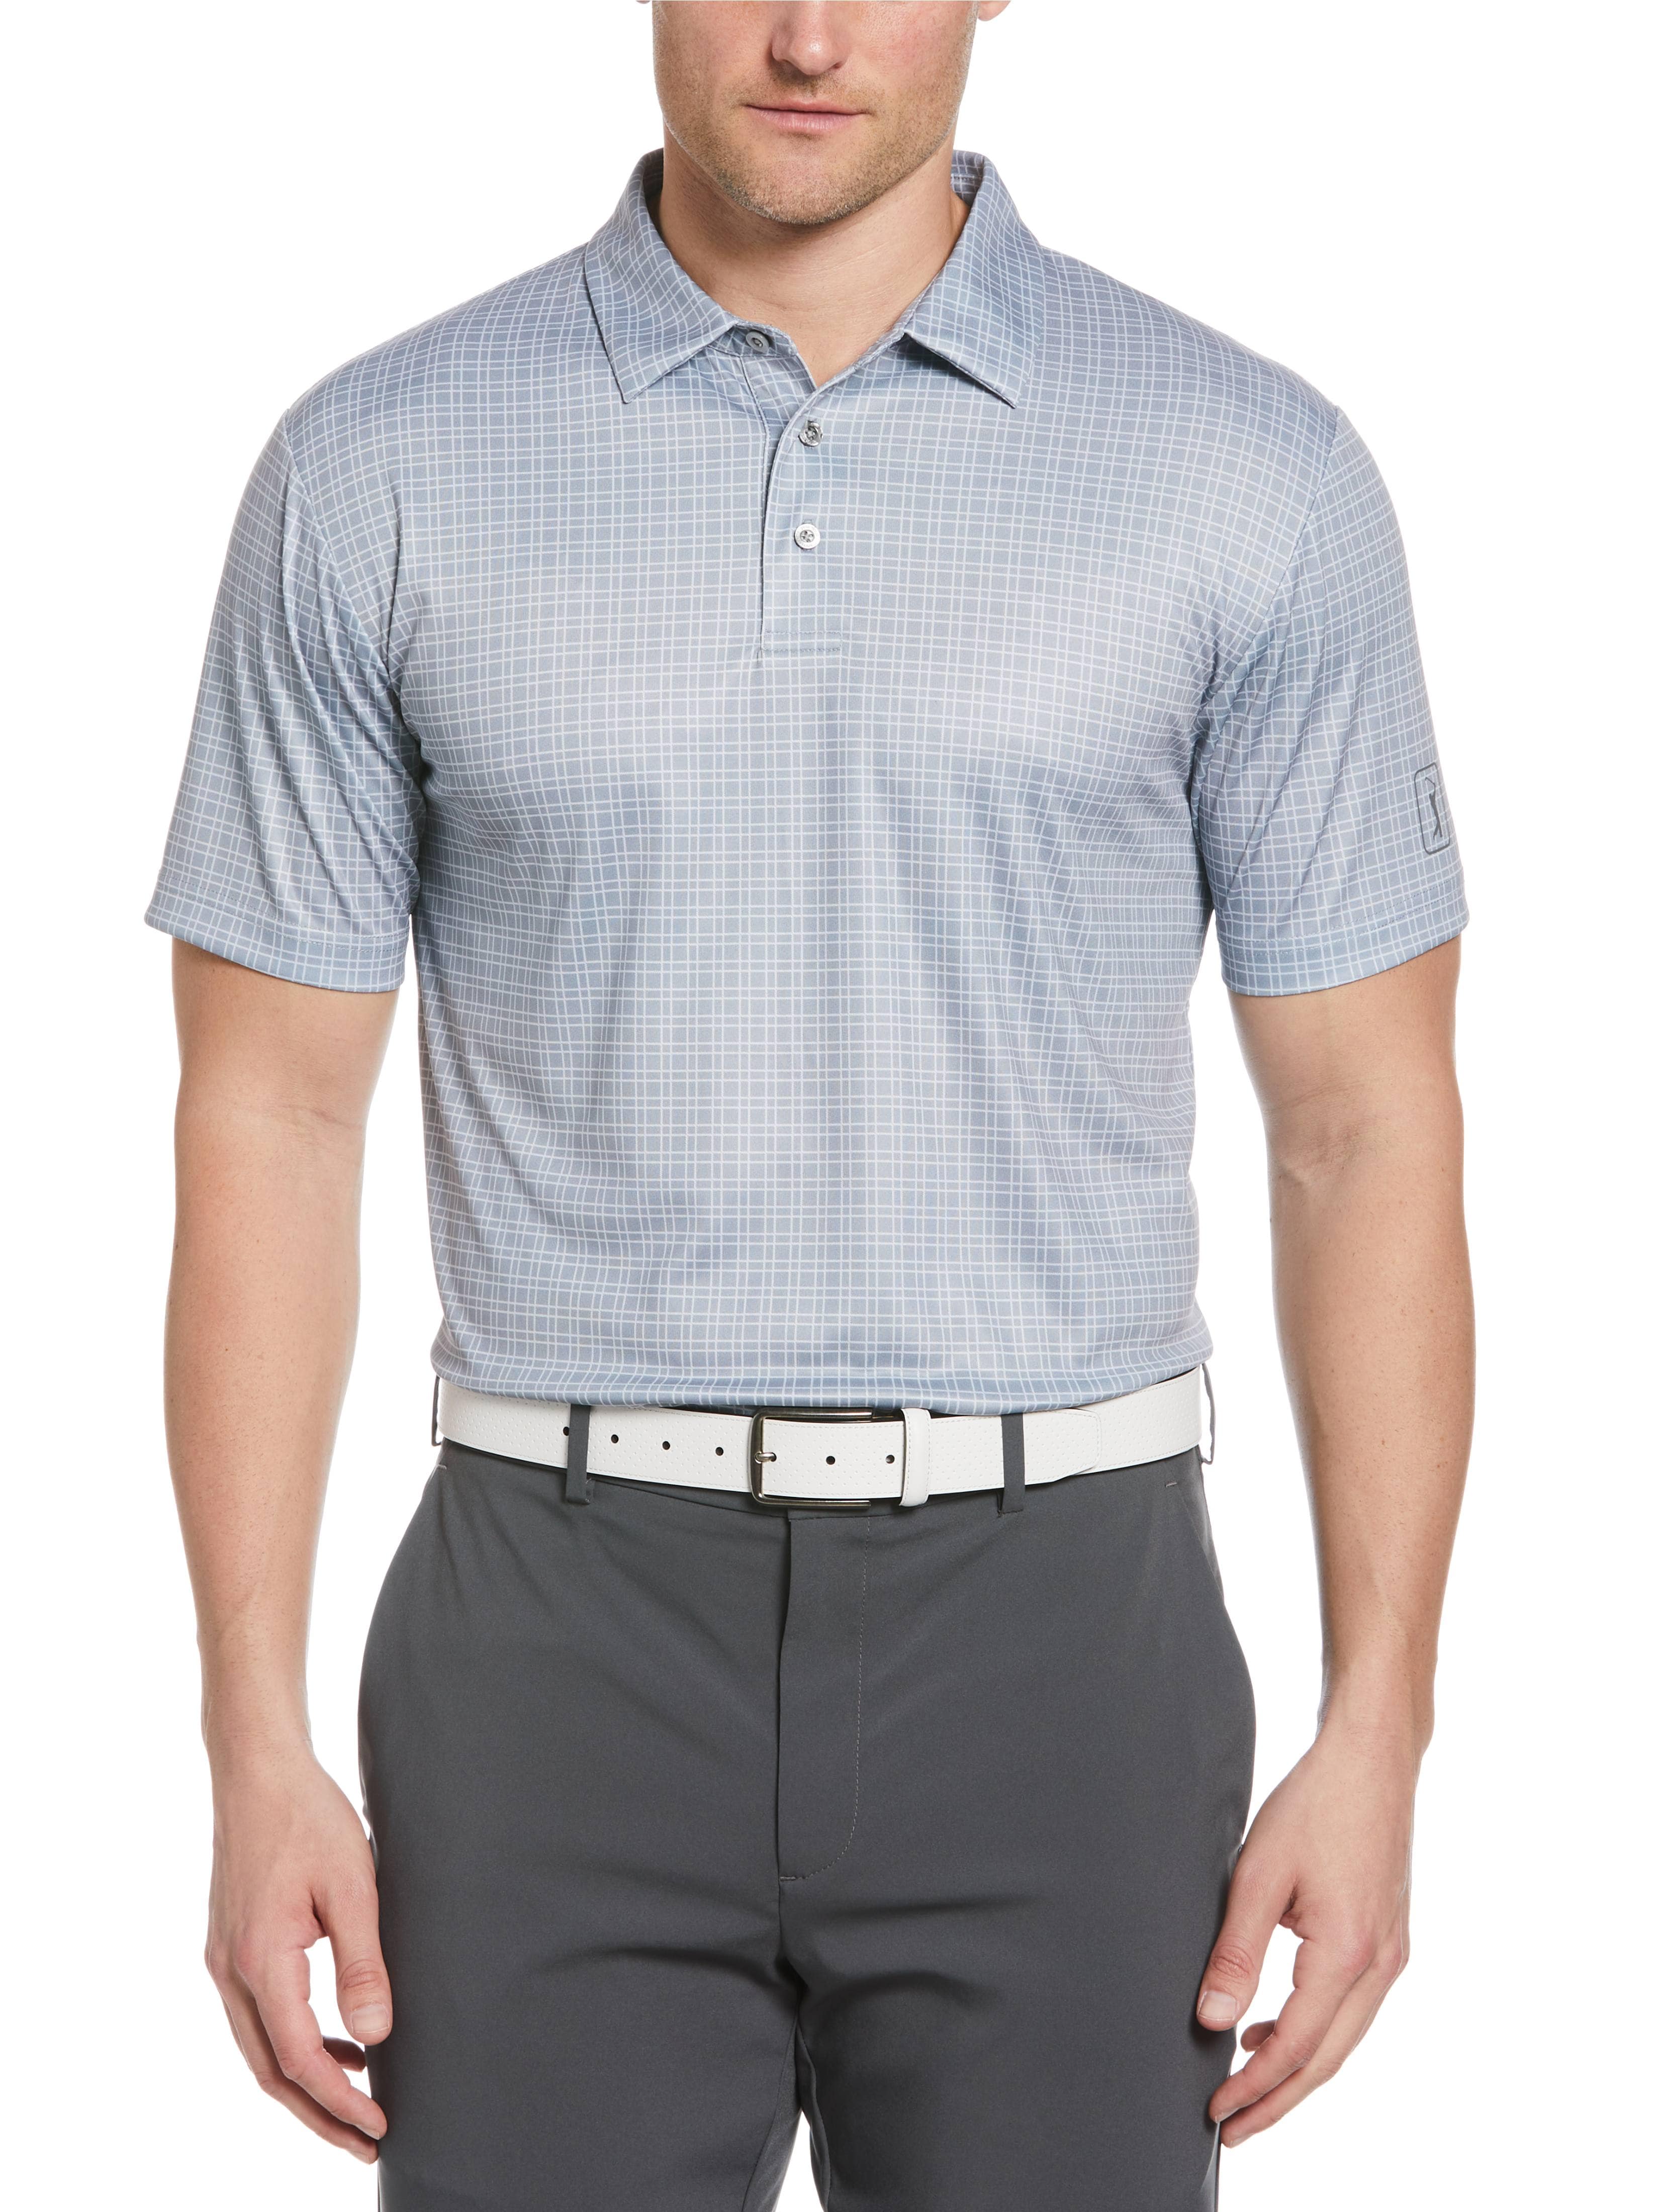 PGA TOUR Apparel Mens Menswear Print Golf Polo Shirt, Size Small, Tradewinds Gray, 100% Polyester | Golf Apparel Shop